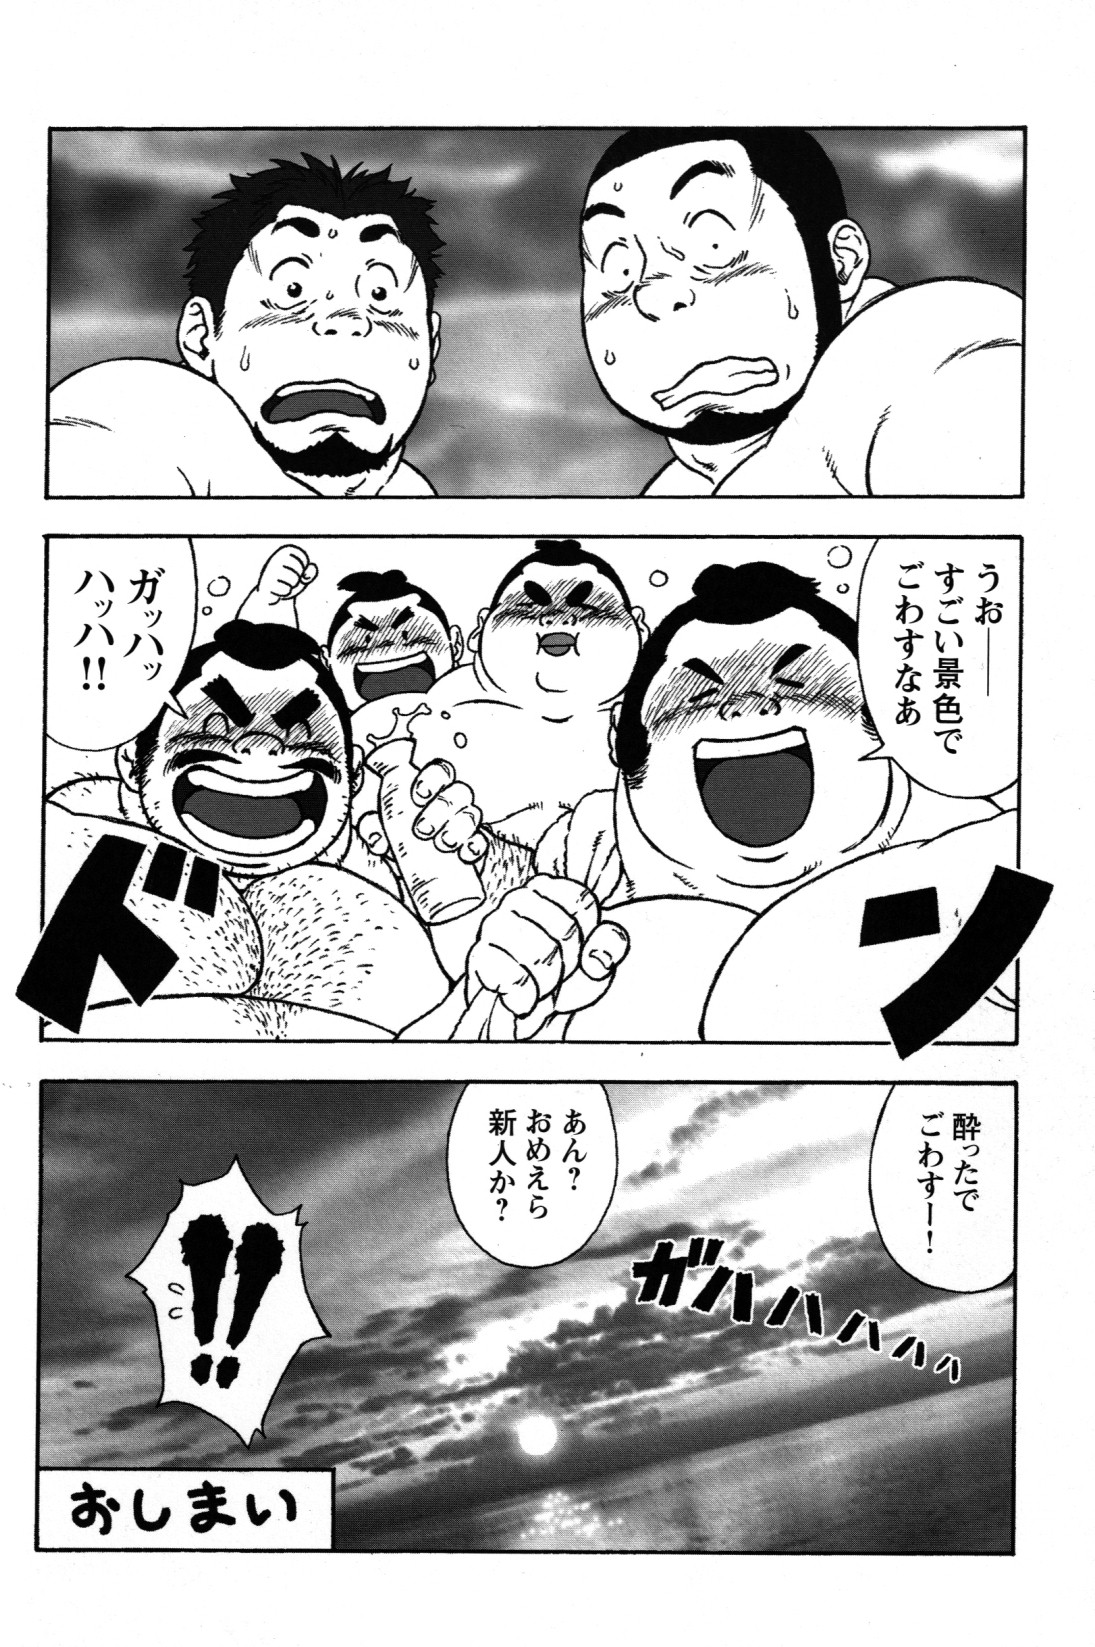 Comic G-men Gaho No.03 